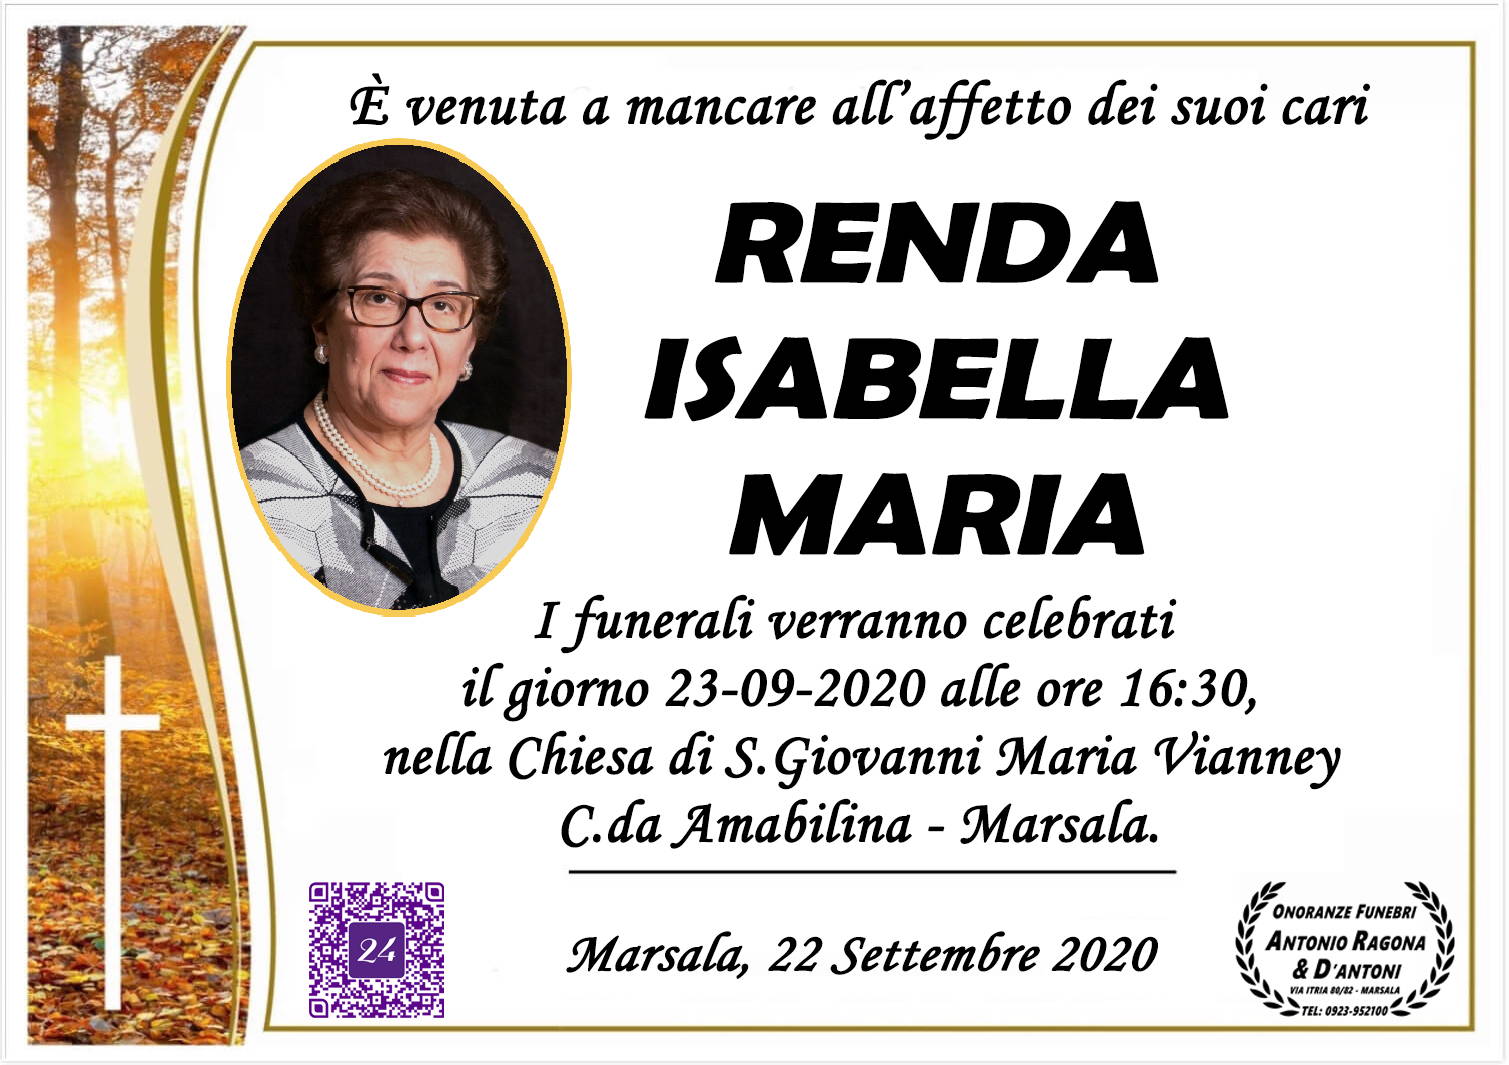 Isabella Maria Renda